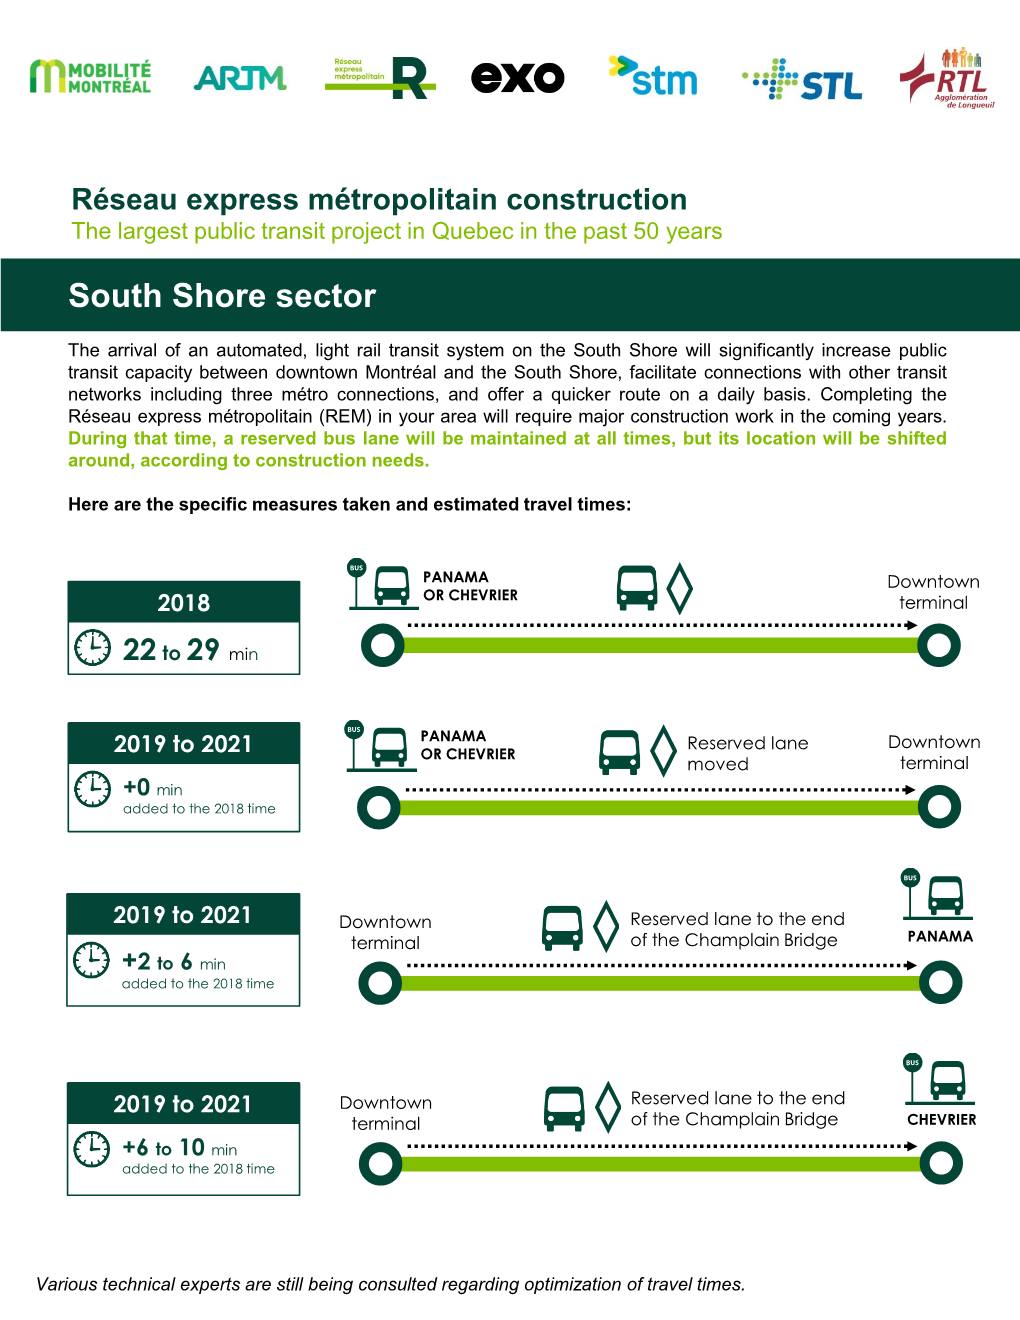 Réseau Express Métropolitain Construction the Largest Public Transit Project in Quebec in the Past 50 Years